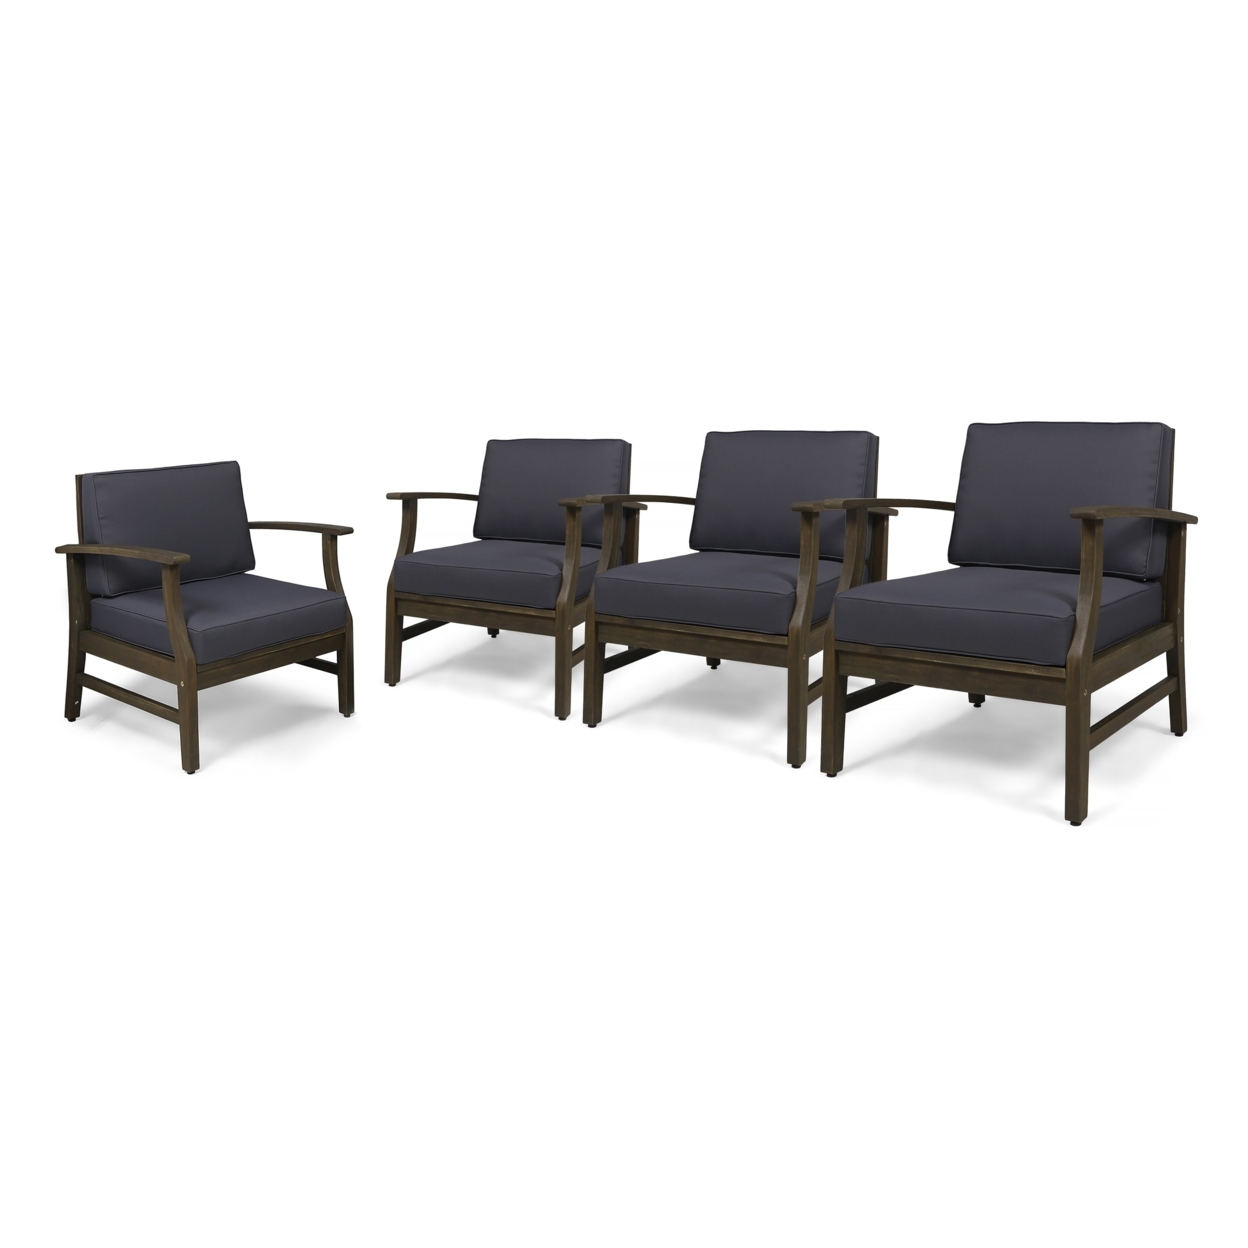 Simona Outdoor Acacia Wood Club Chairs With Cushions - Gray / Dark Gray, Set Of 4